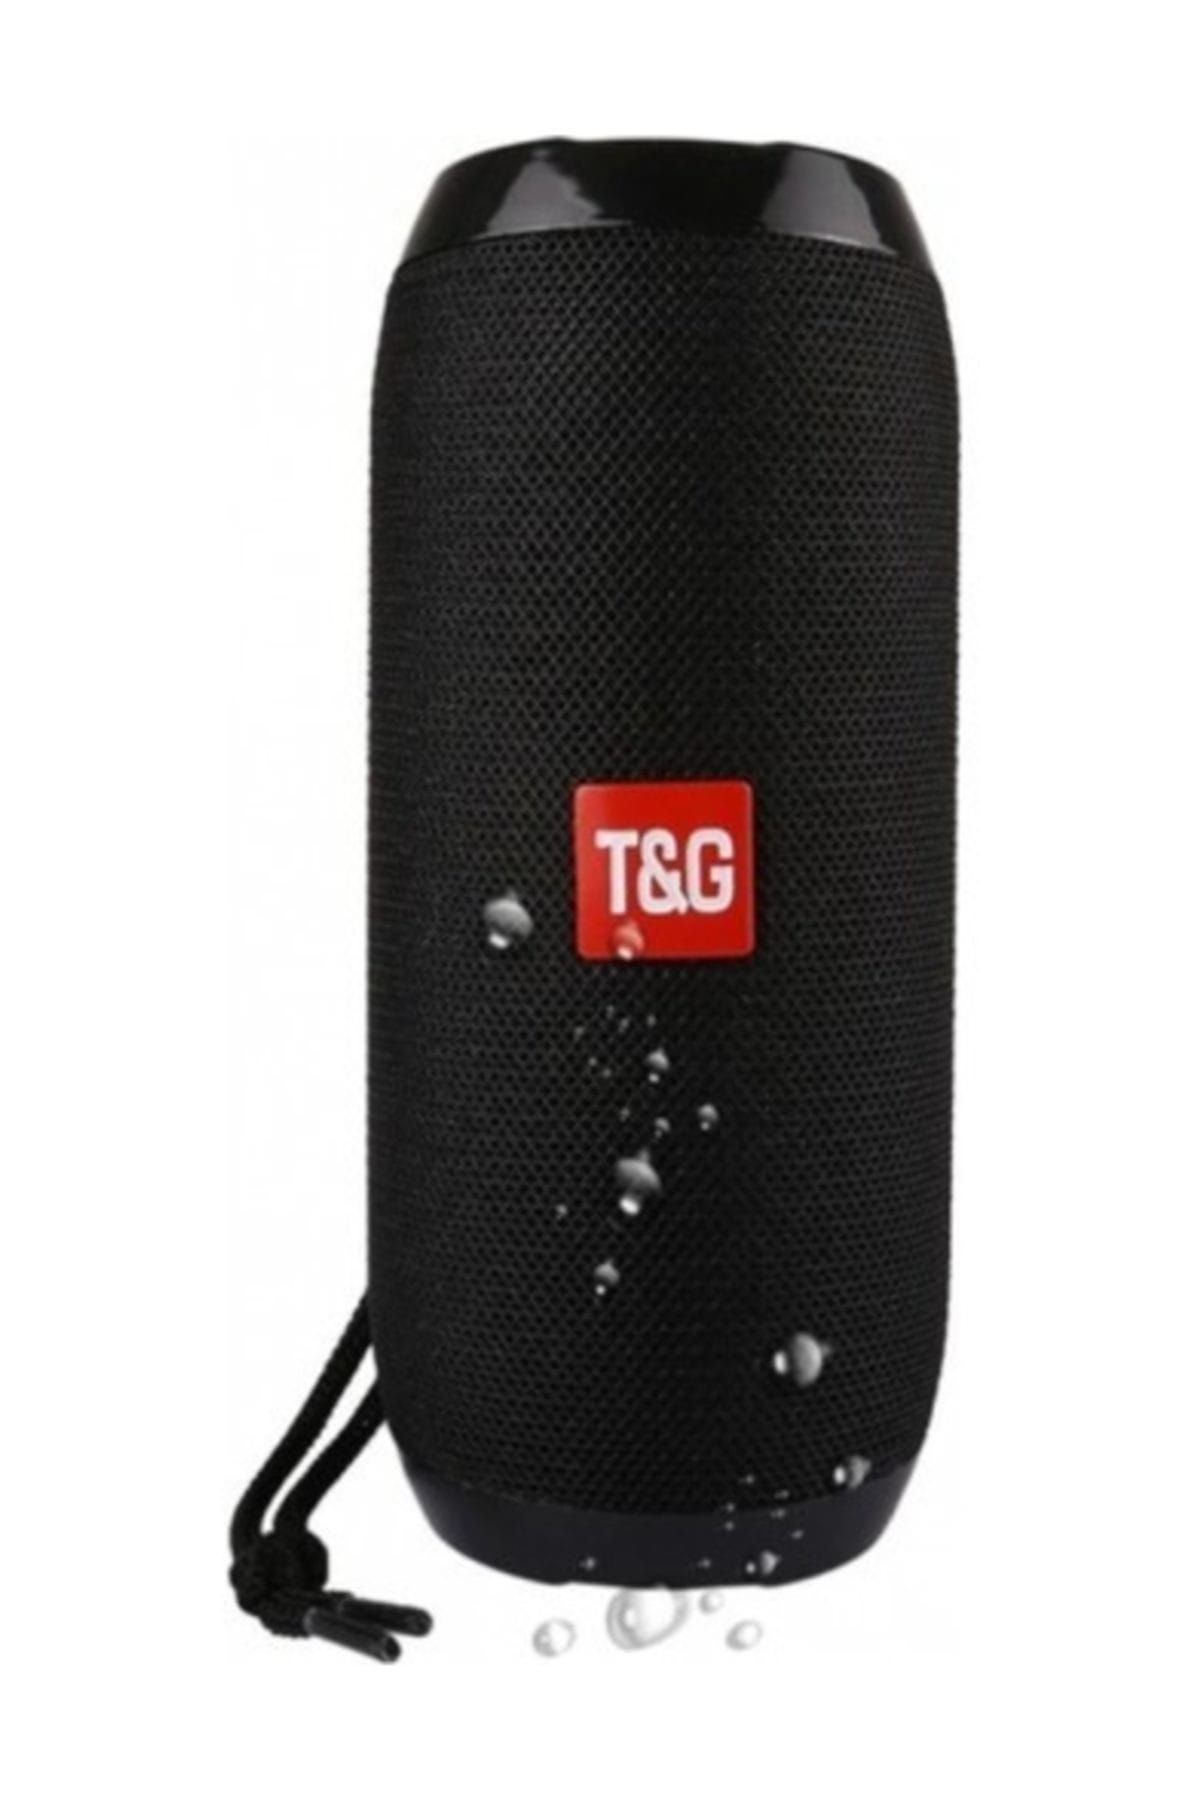 Eragon T&G Baslı Bluetooth Mp3 Şarjlı Müzik Çalar Speaker Hoparlör